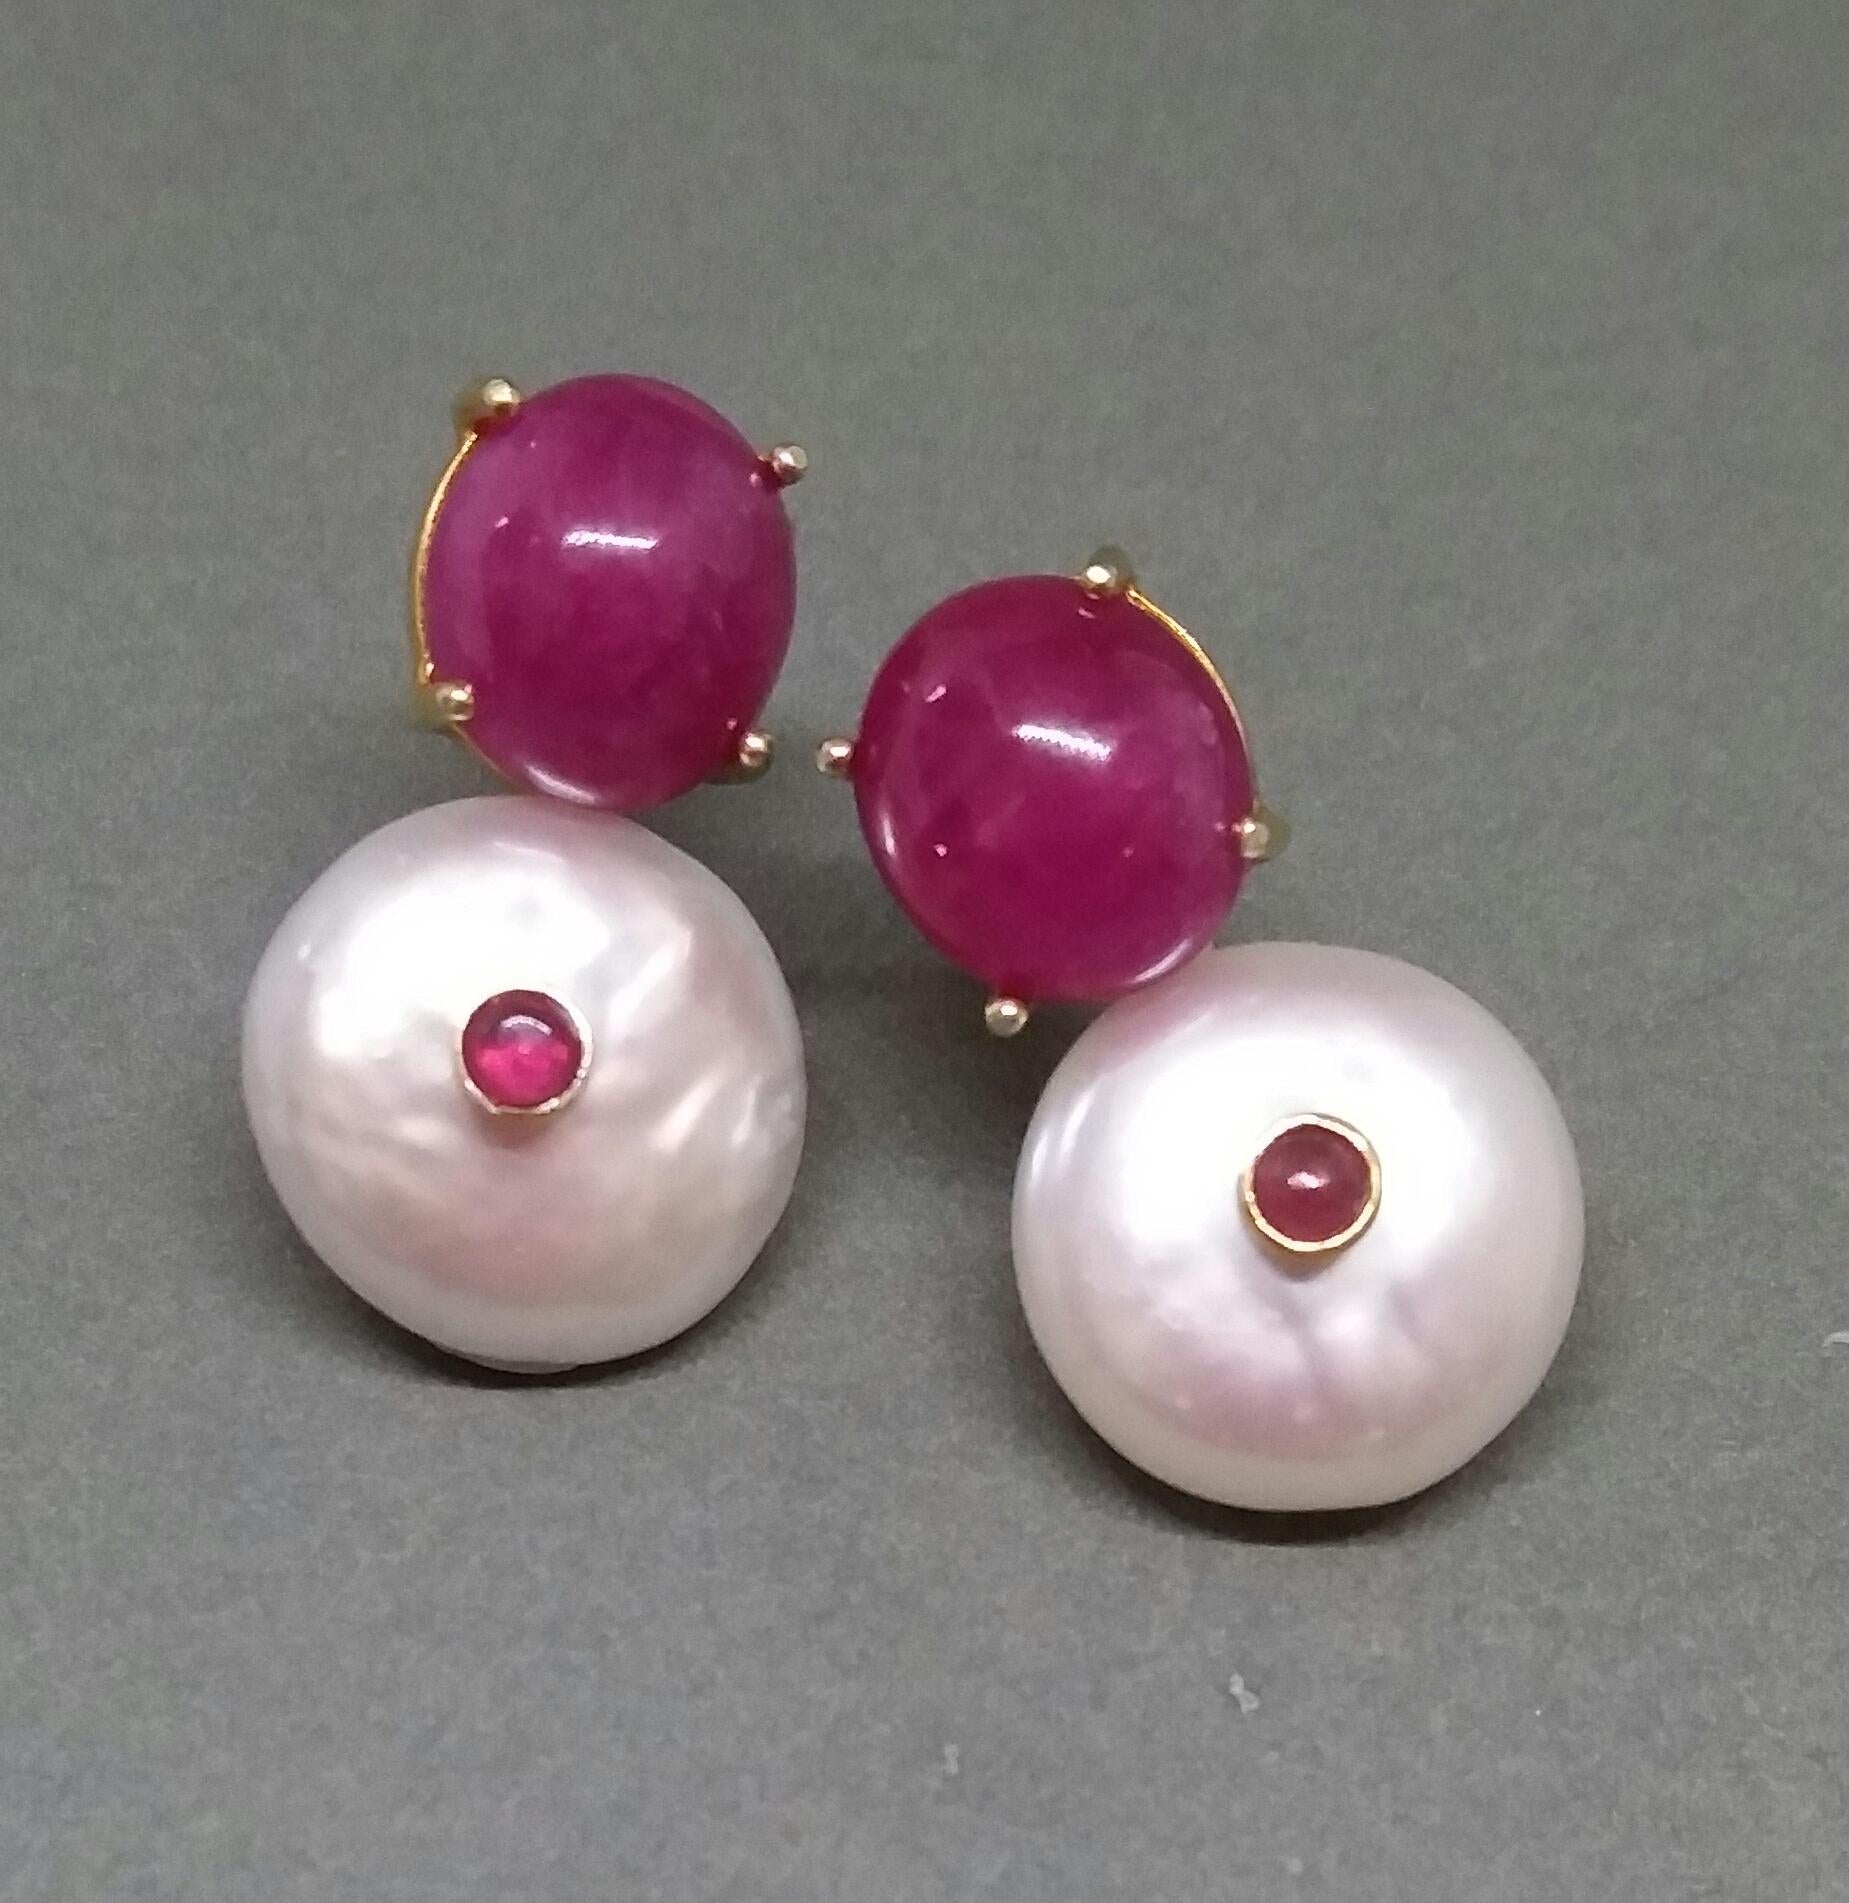 flat pearl stud earrings